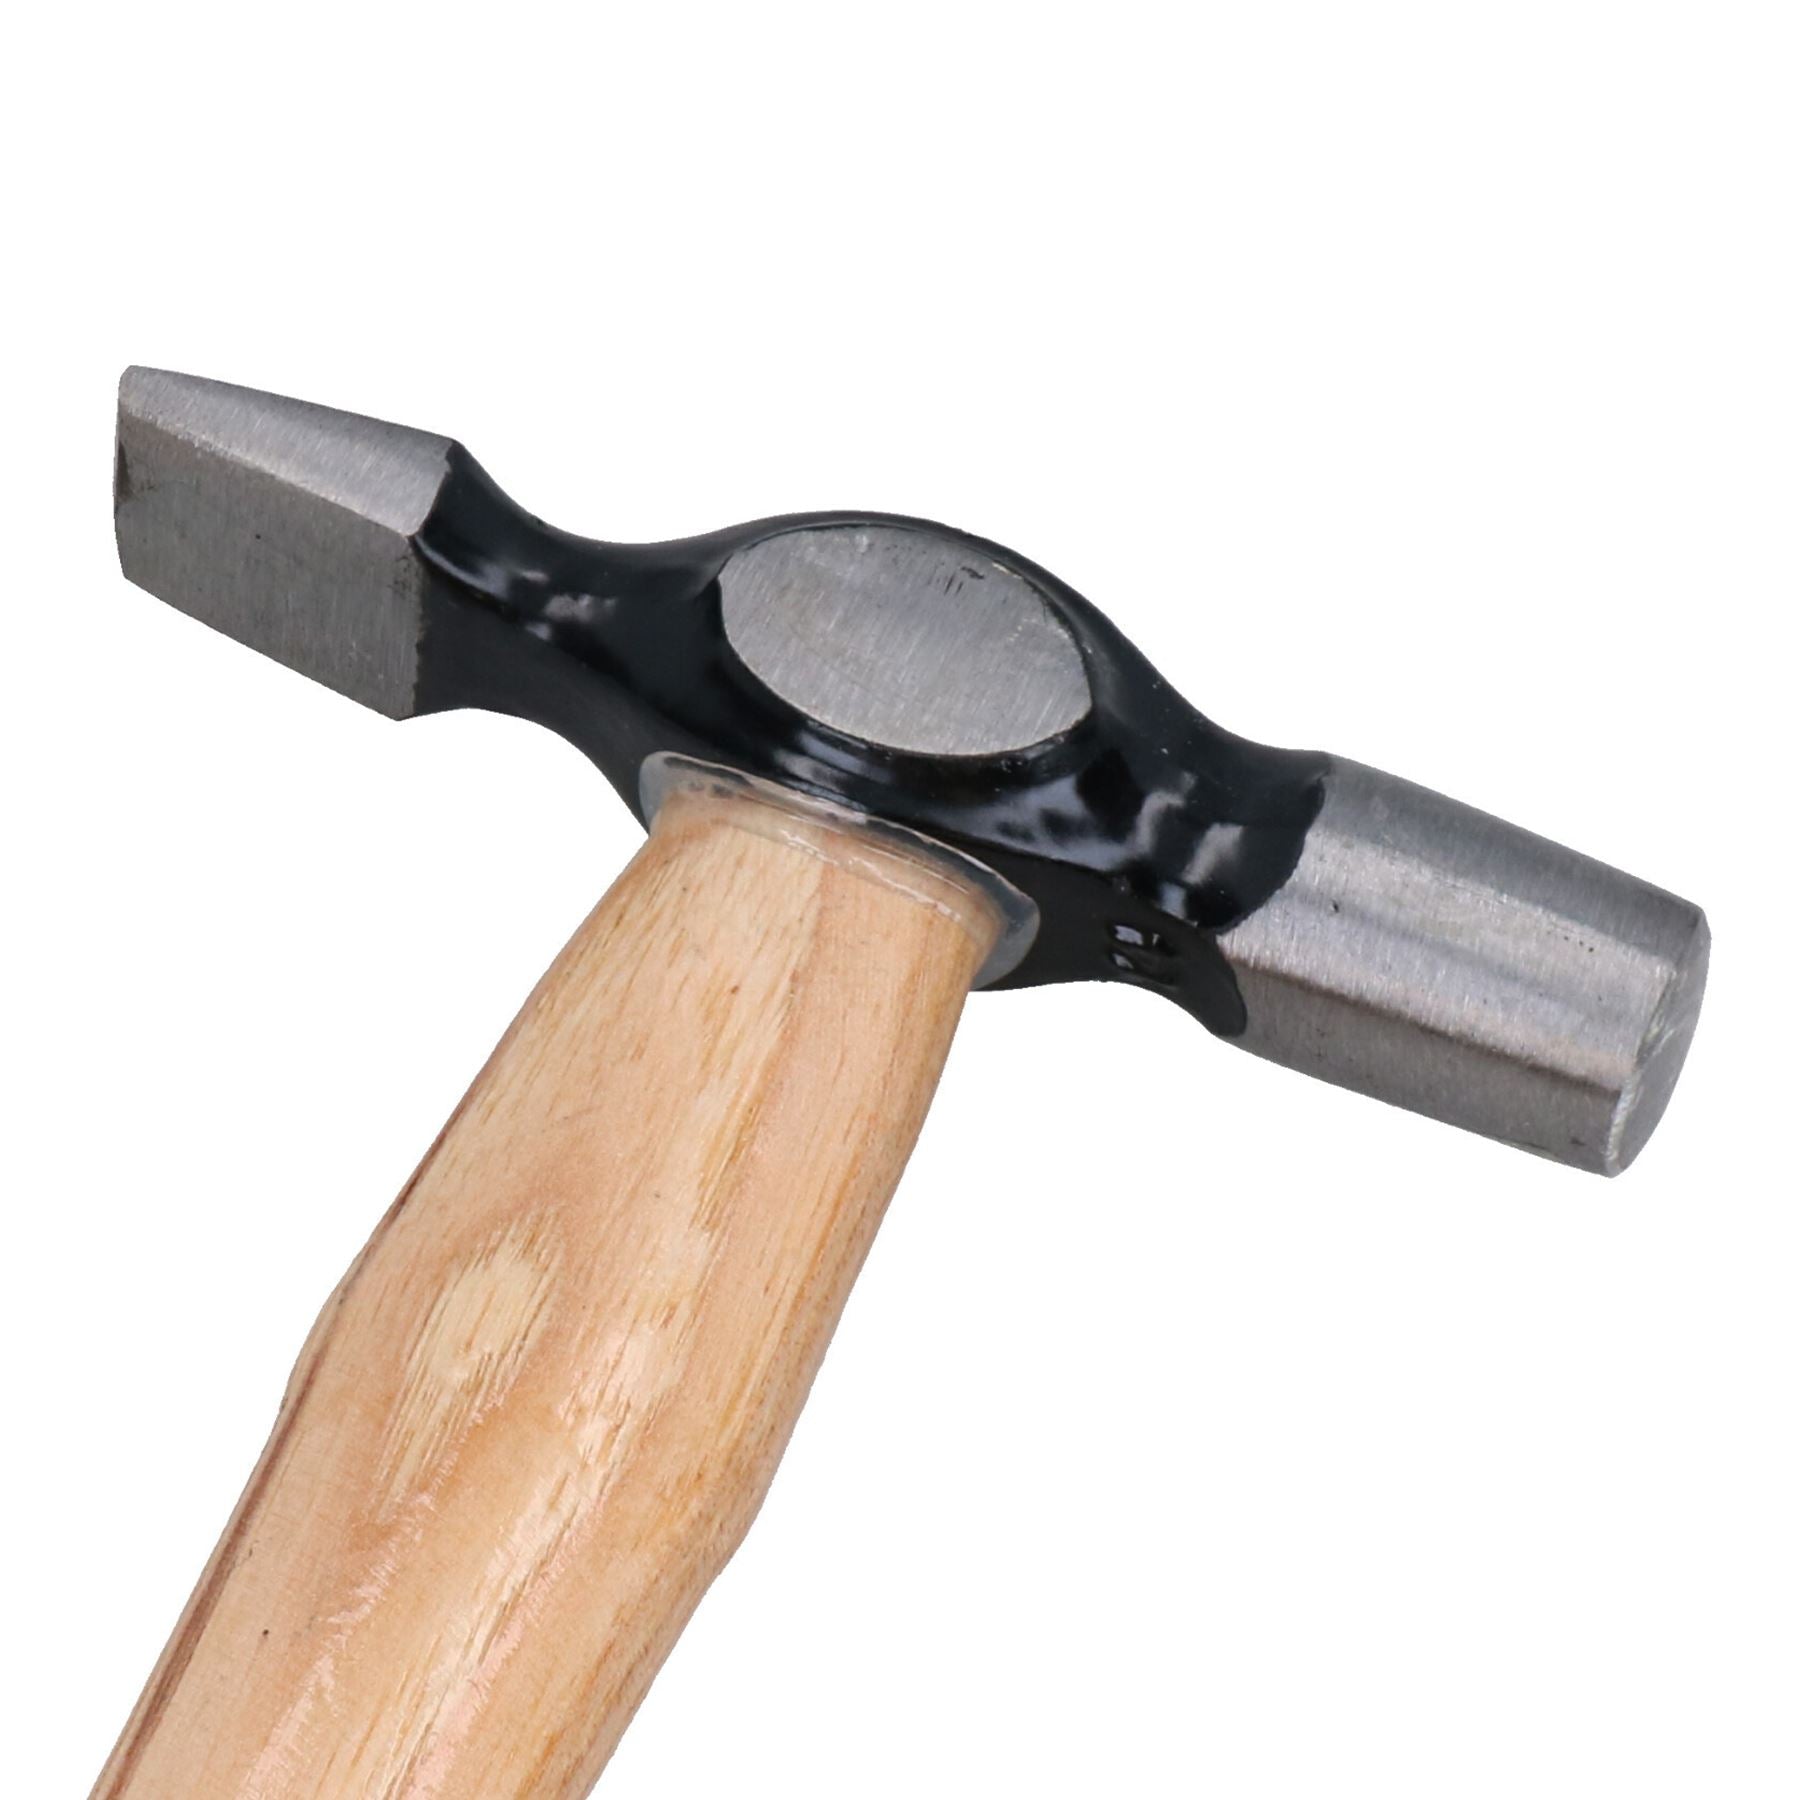 4oz Genuine Wooden Hickory Handle Ball Pin Hammer Ball Pein TE421